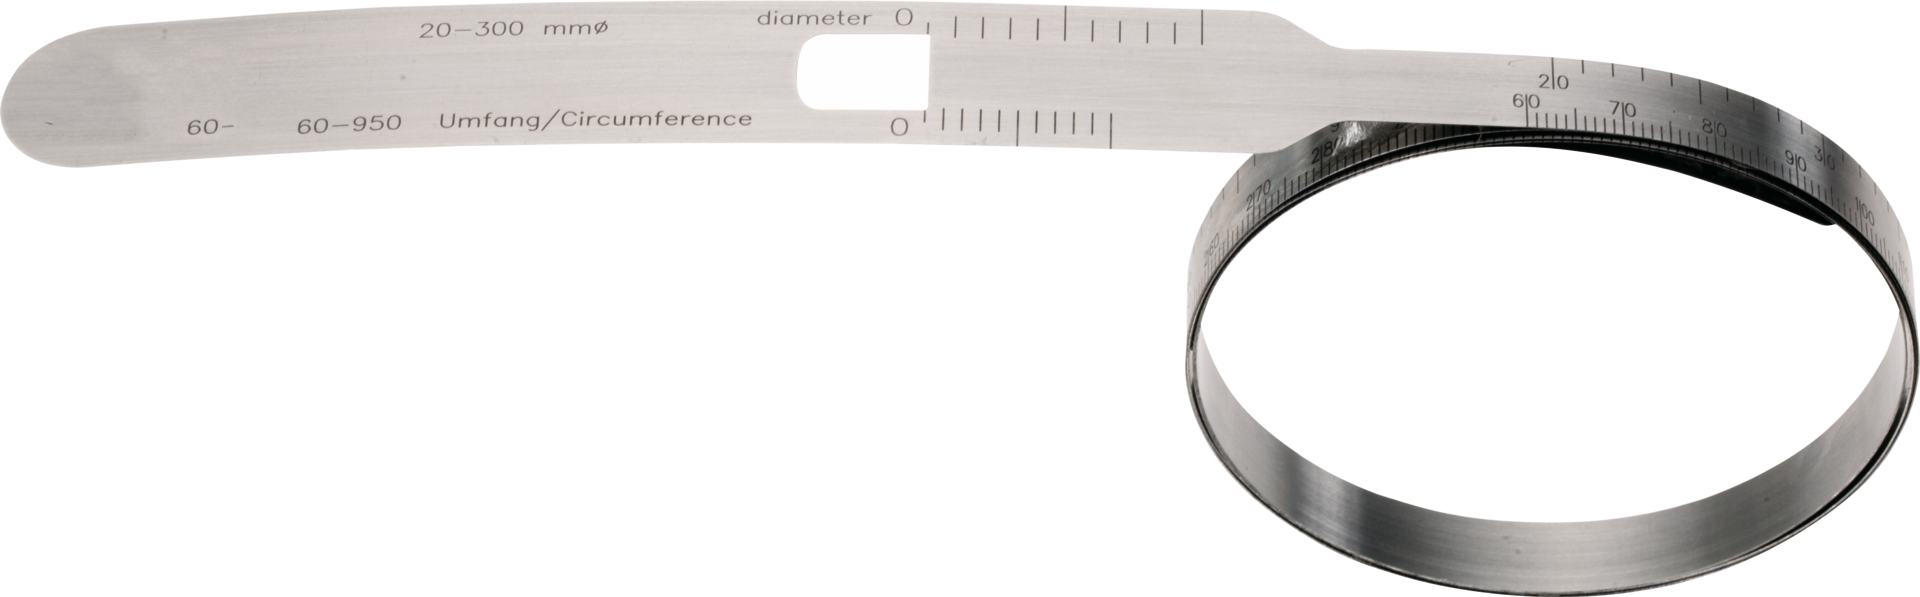 Bandmaß Umfang/Durchmesser U60-950mm D20-300mm Abl. 0,1mm WN